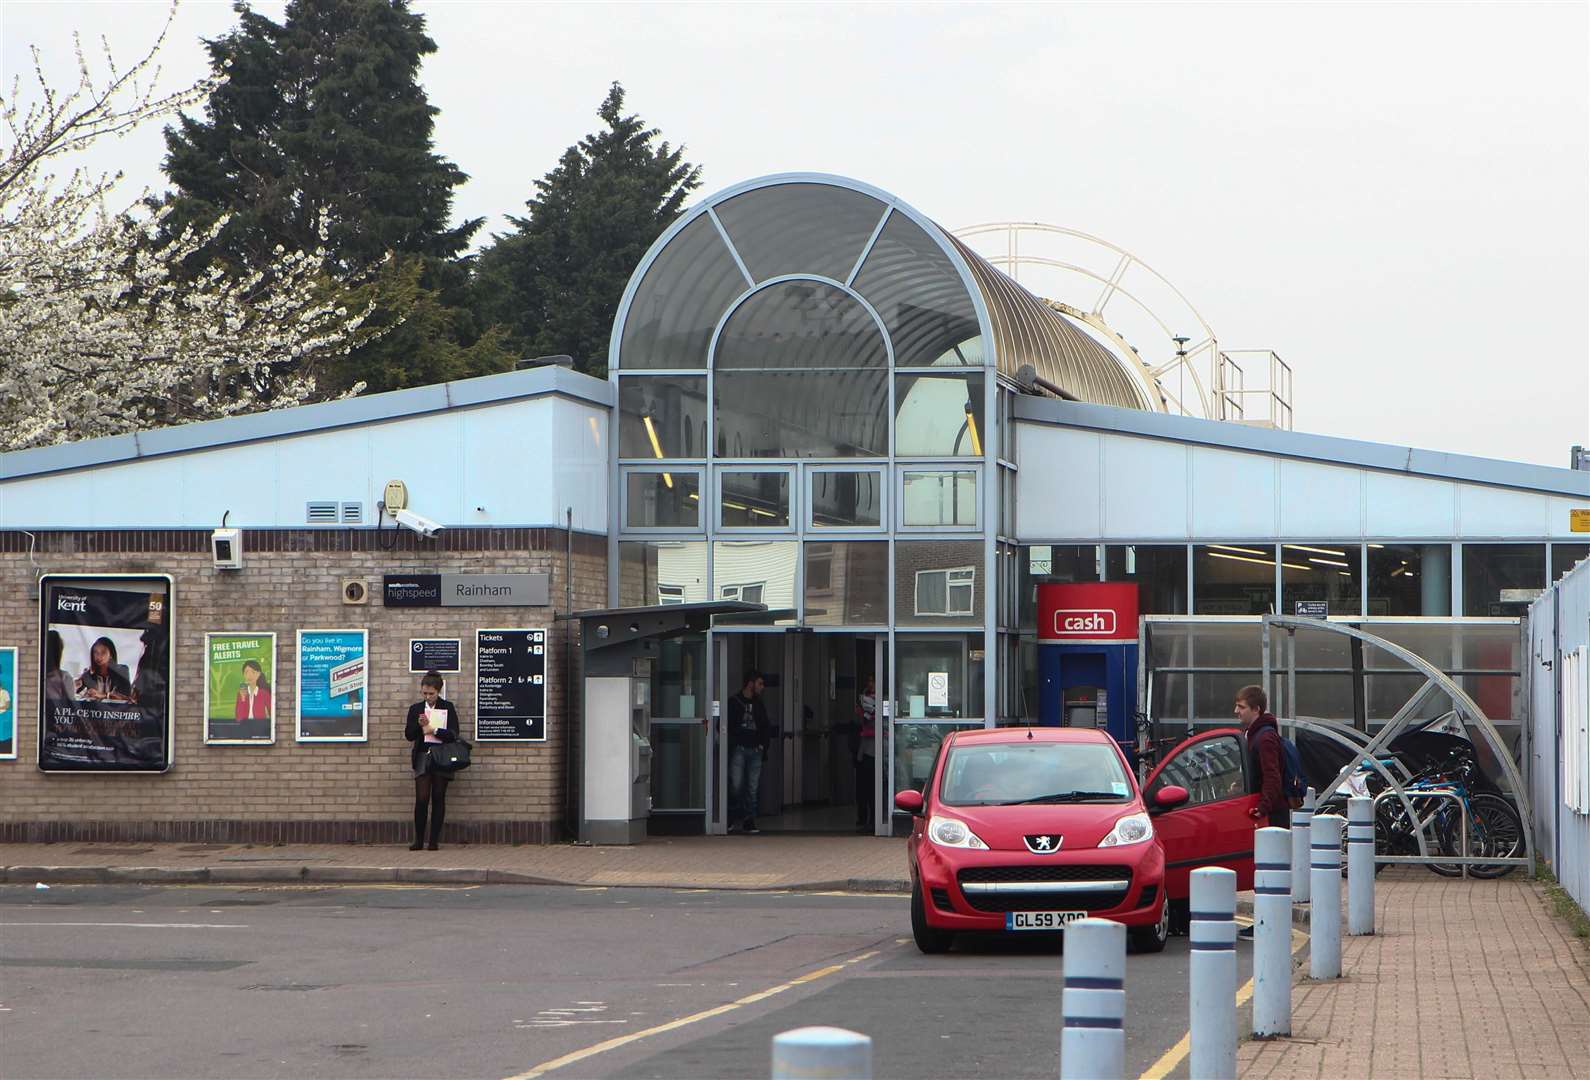 Offences were reported around Rainham Railway Station. Picture: Darren Small